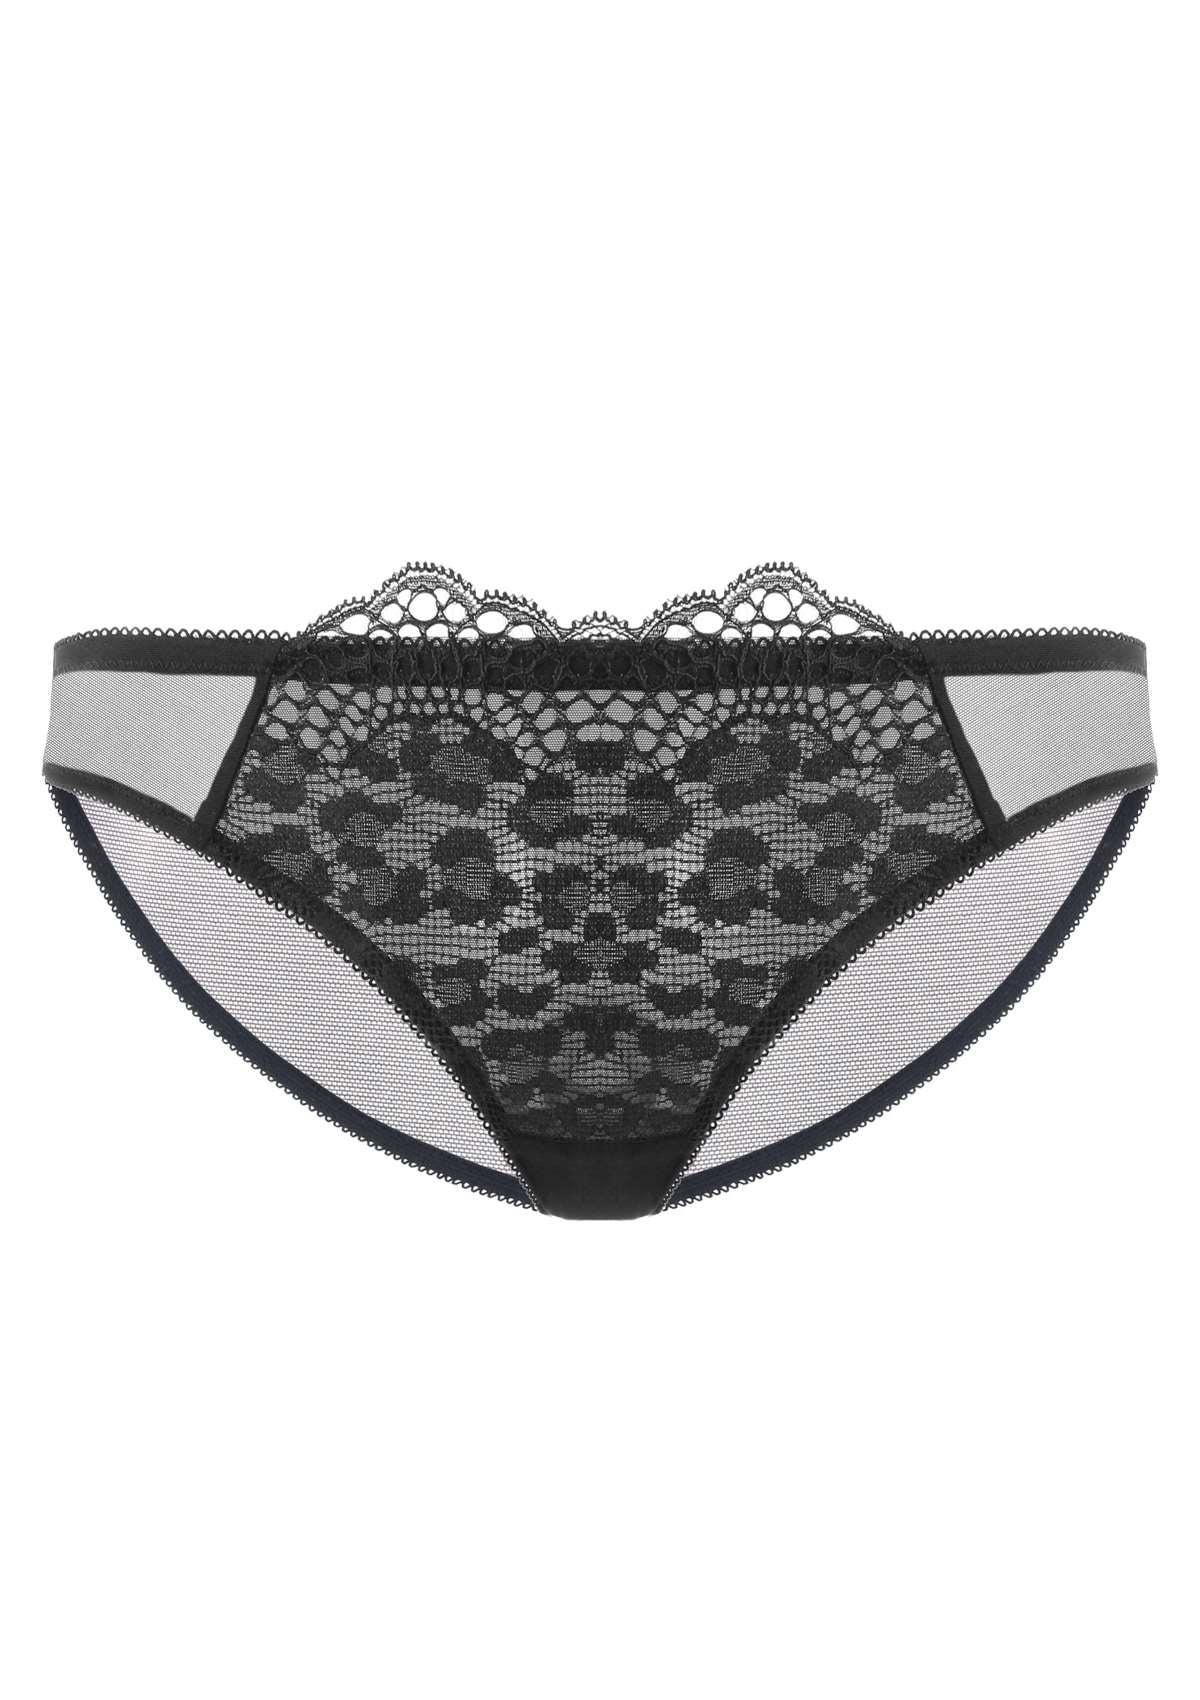 HSIA Leopard-Print Lace Front Mesh Back Bikini Panties - 3 Pack - L / Purple+Black+Gray